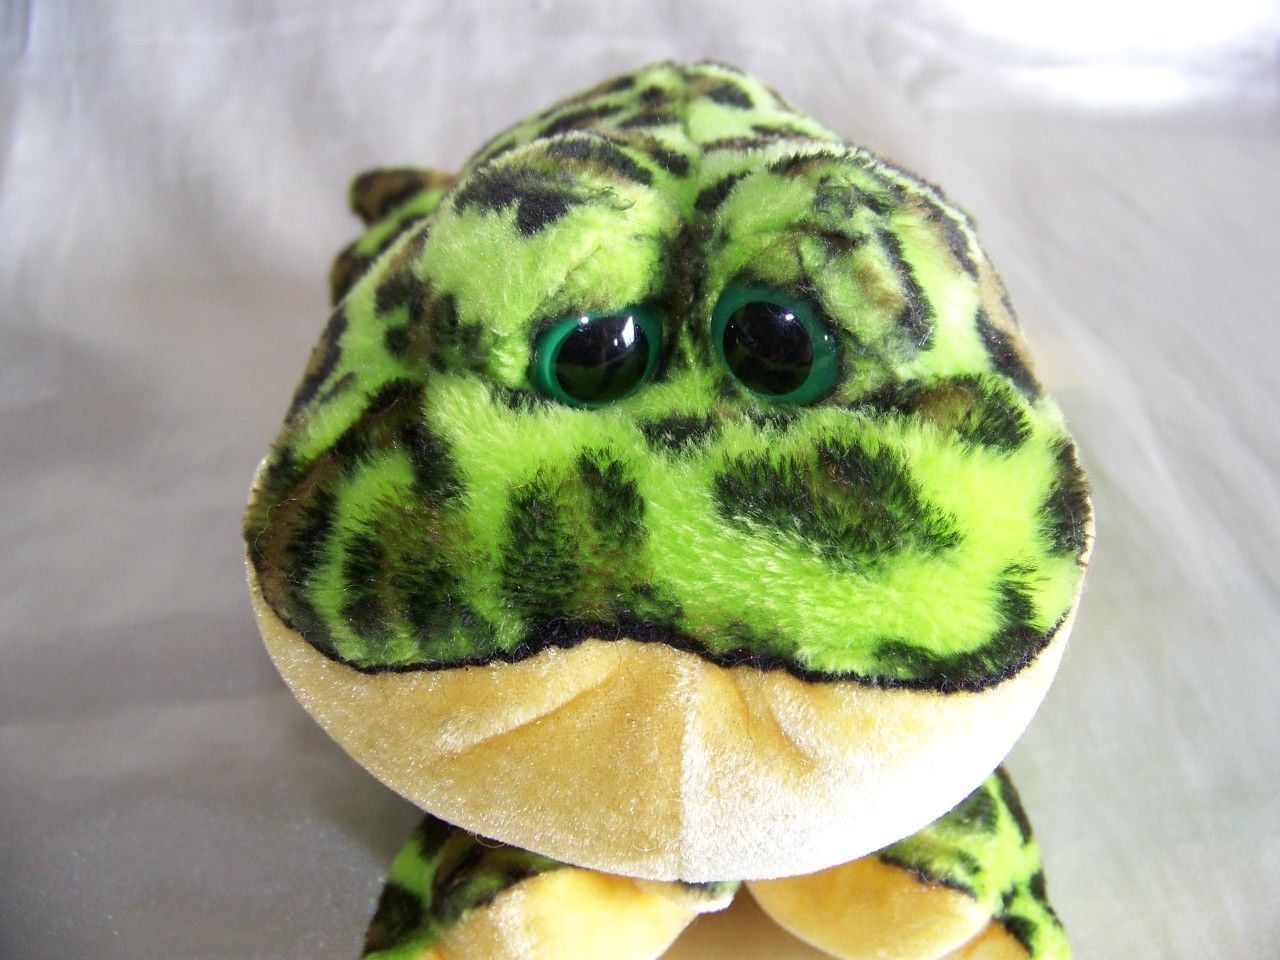 webkinz bullfrog